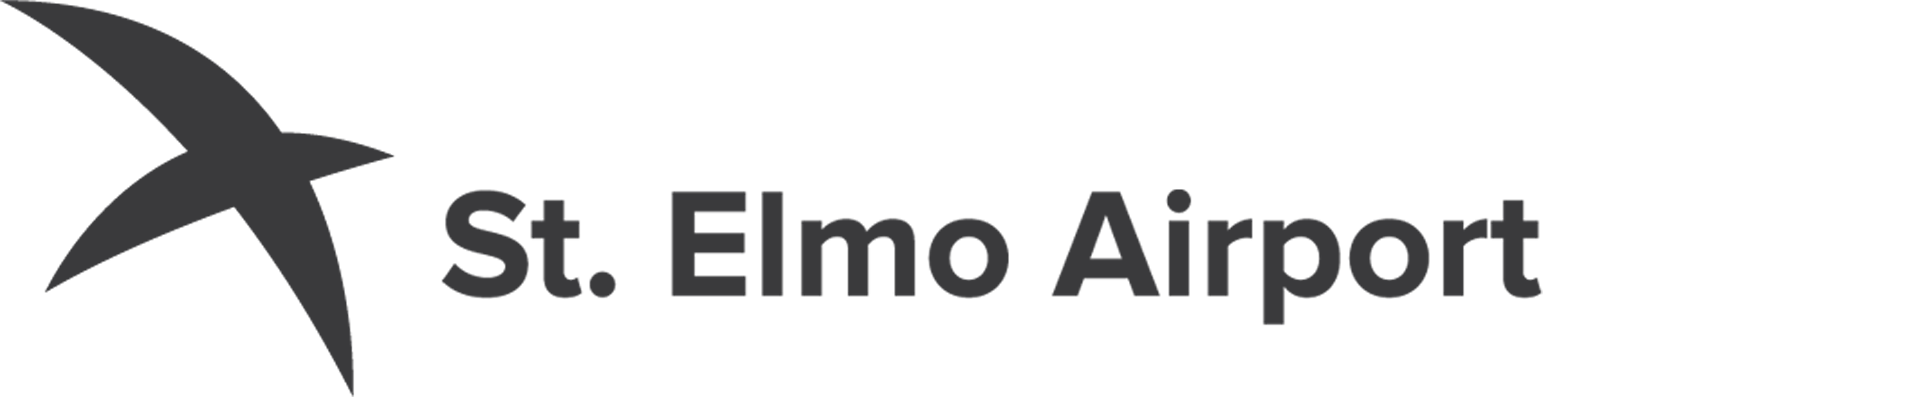 St. Elmo Airport Logo